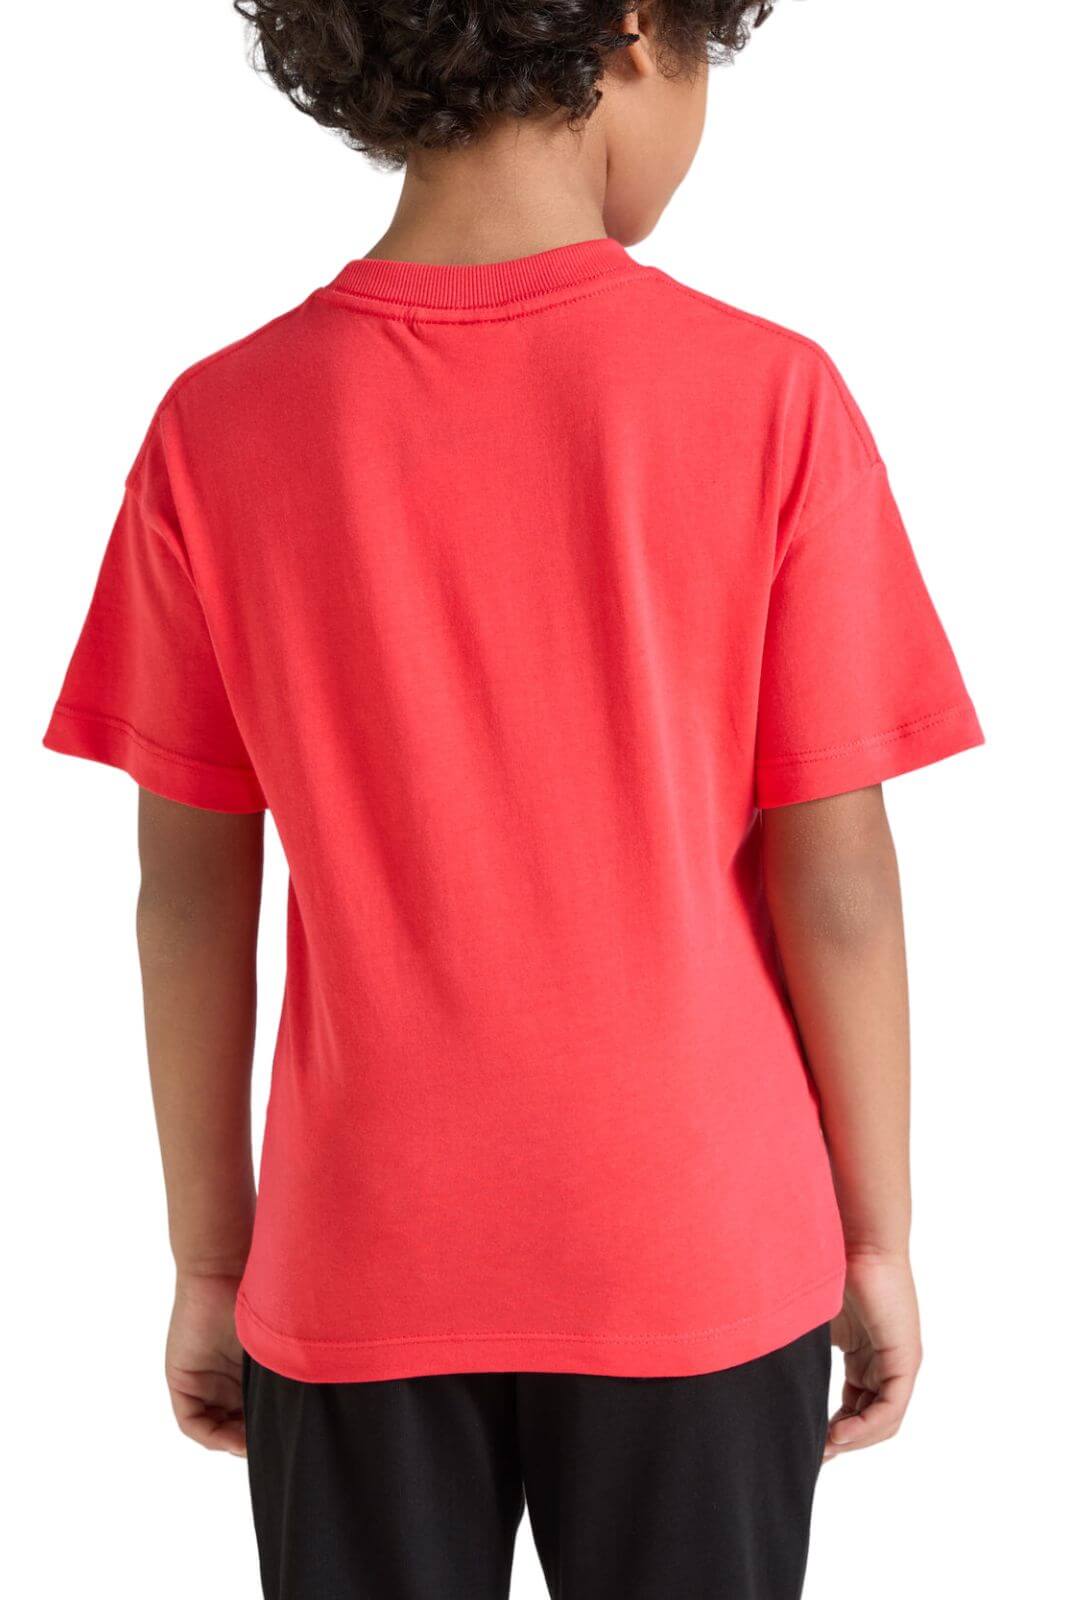 Diadora T-Shirt Bambino SS RAINBOW